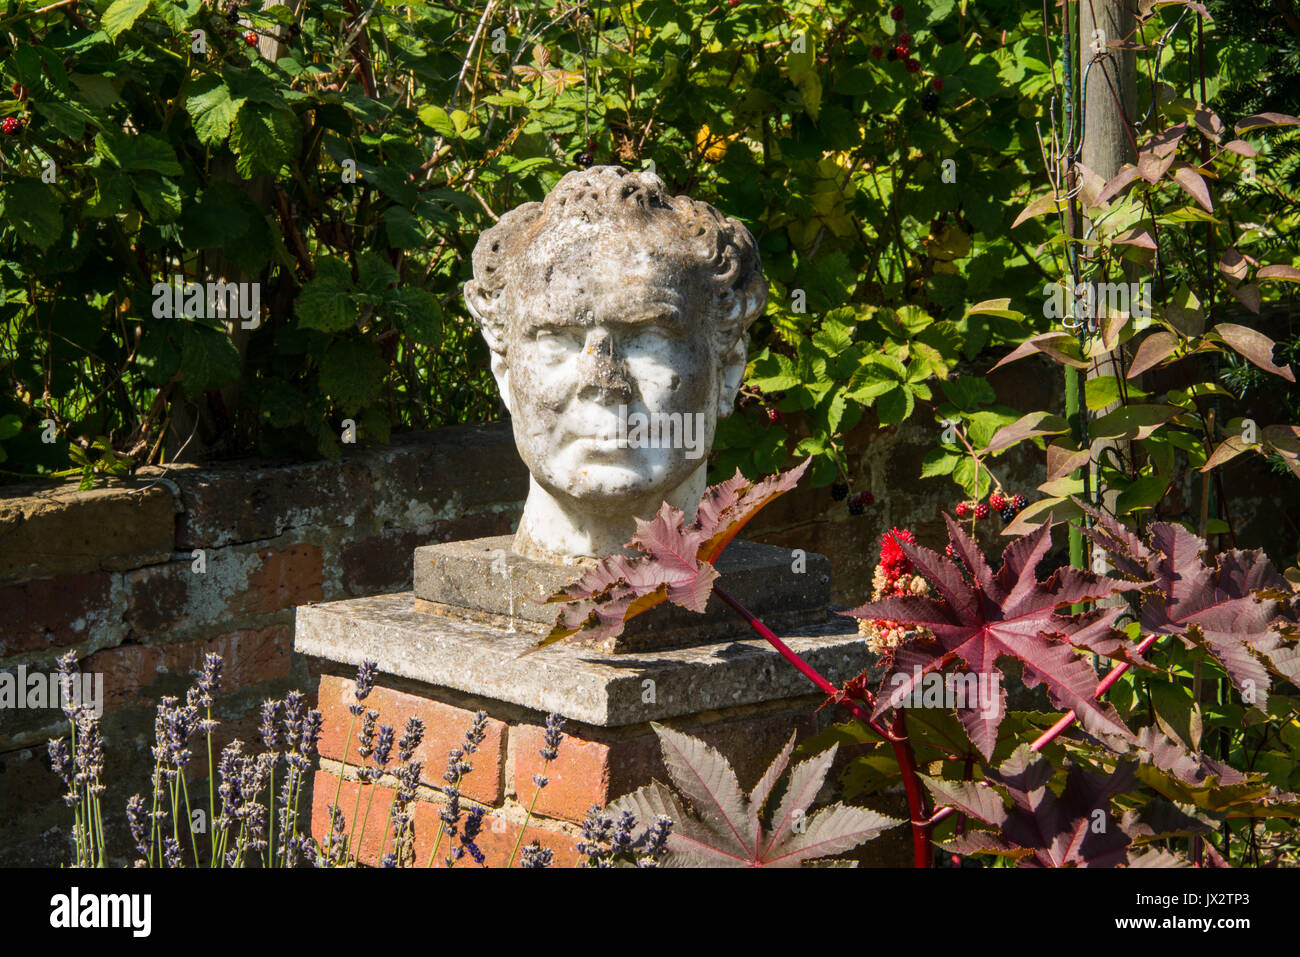 An Old Marble Head In An Urban Garden Stock Photo 153727339 Alamy